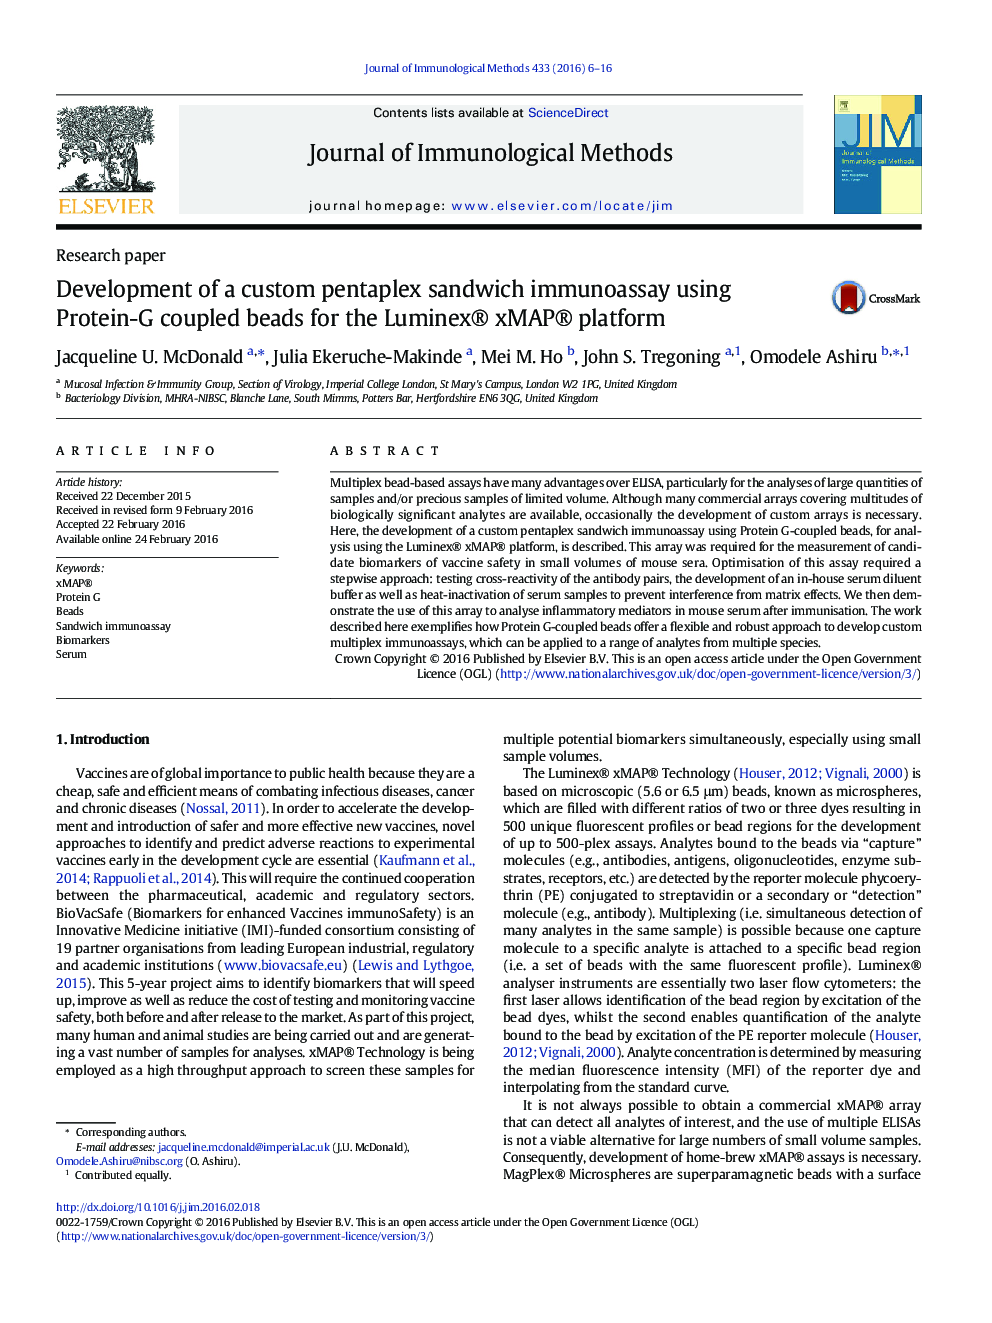 Development of a custom pentaplex sandwich immunoassay using Protein-G coupled beads for the Luminex® xMAP® platform